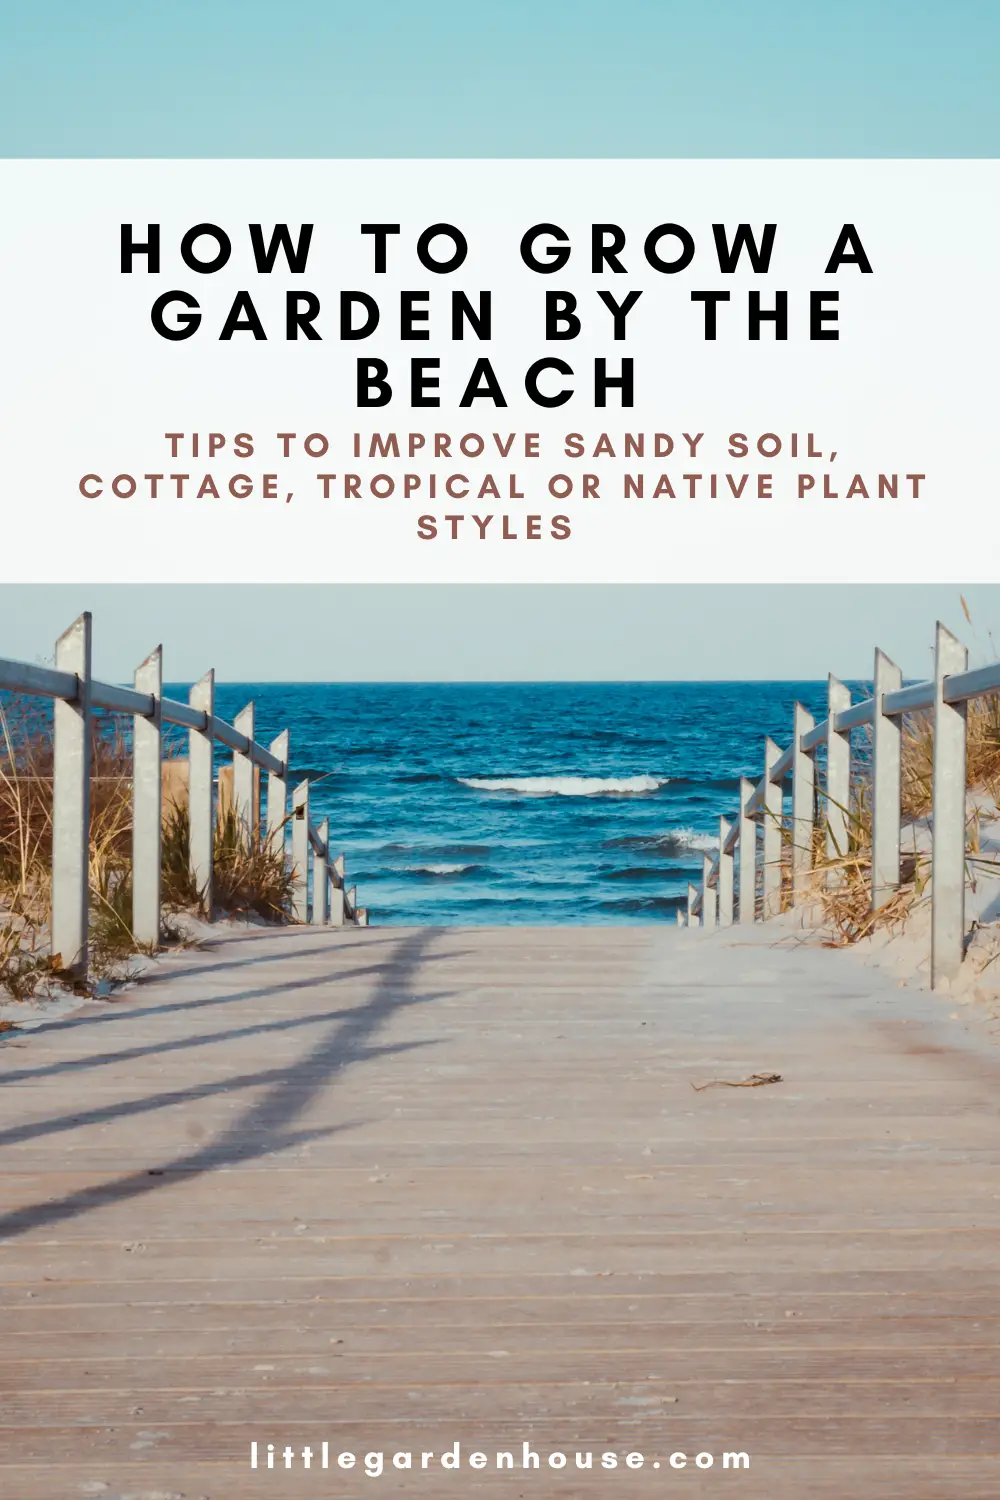 How to Grow a Garden by the Beach